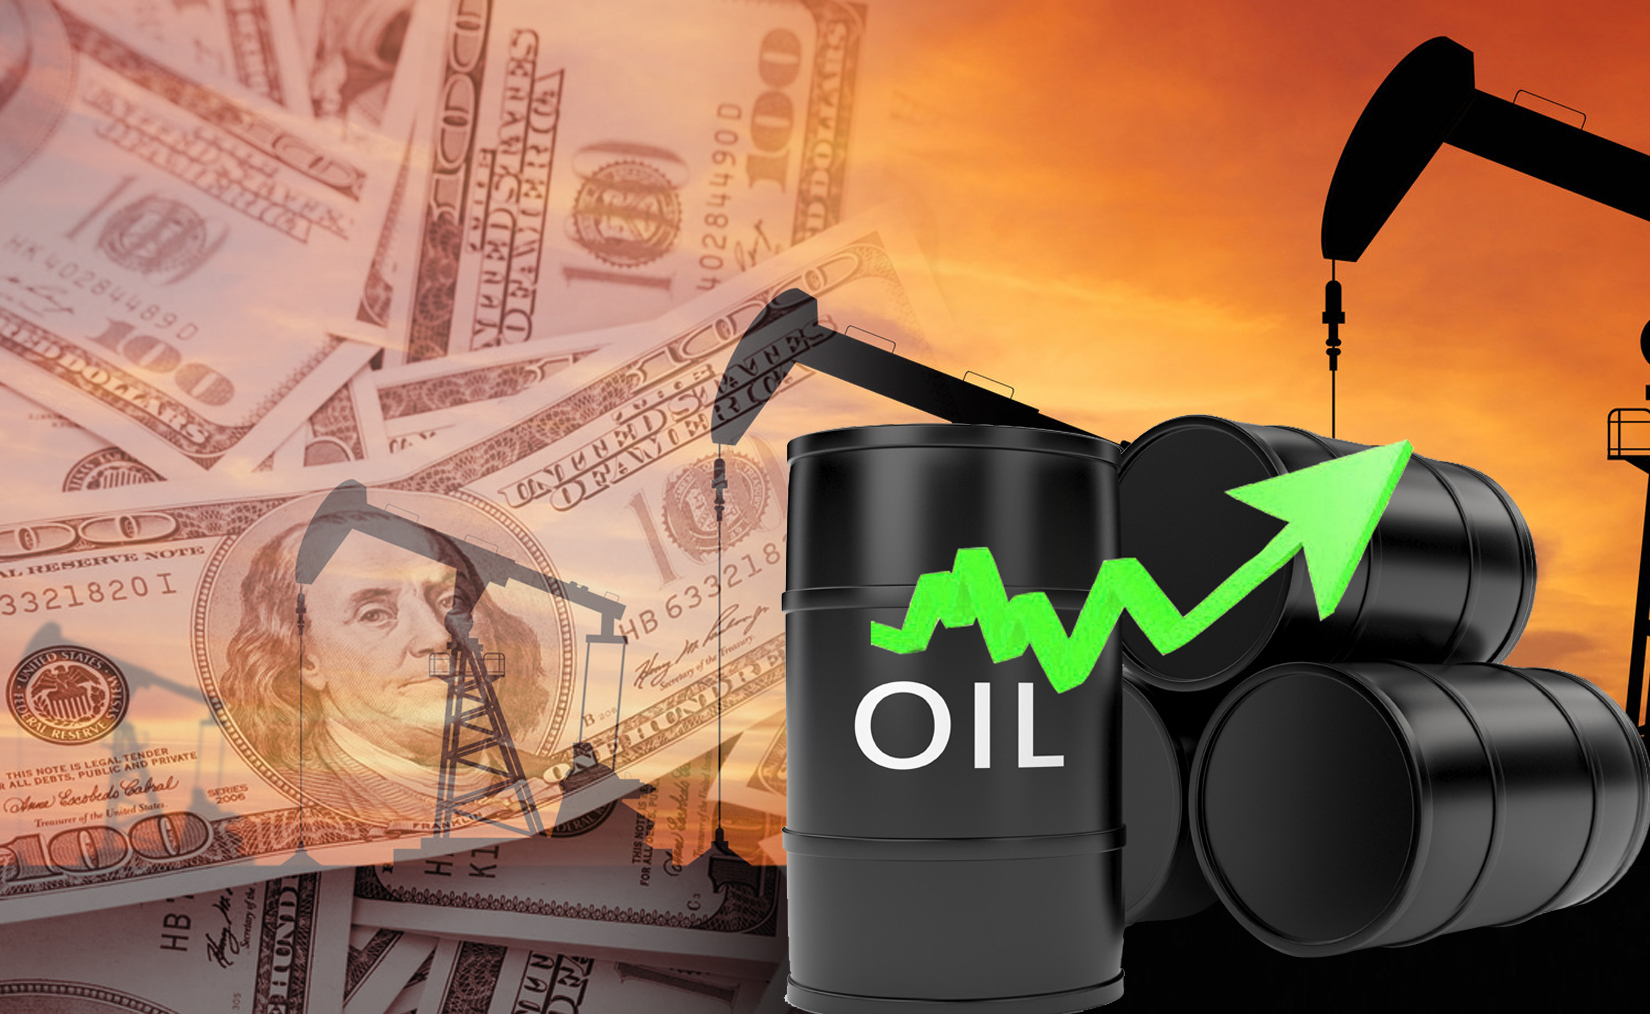 Kuwait oil price leaps 3 points above USD 30 pb threshold                                                                                                                                                                                                 